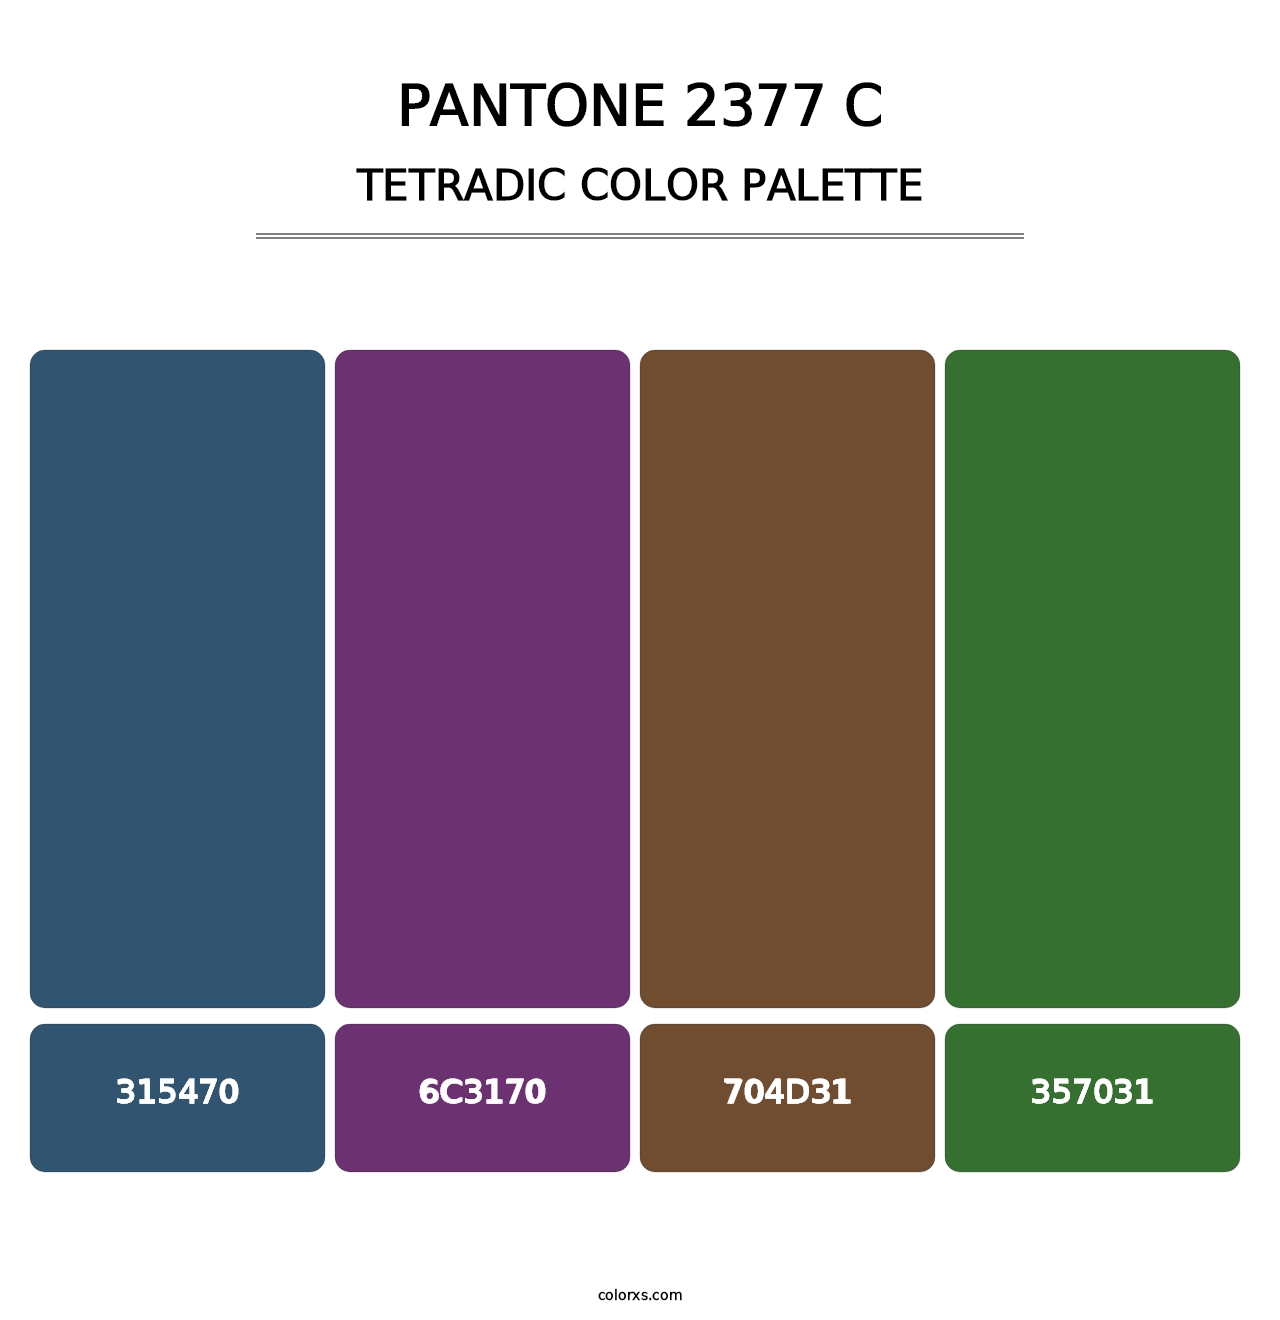 PANTONE 2377 C - Tetradic Color Palette